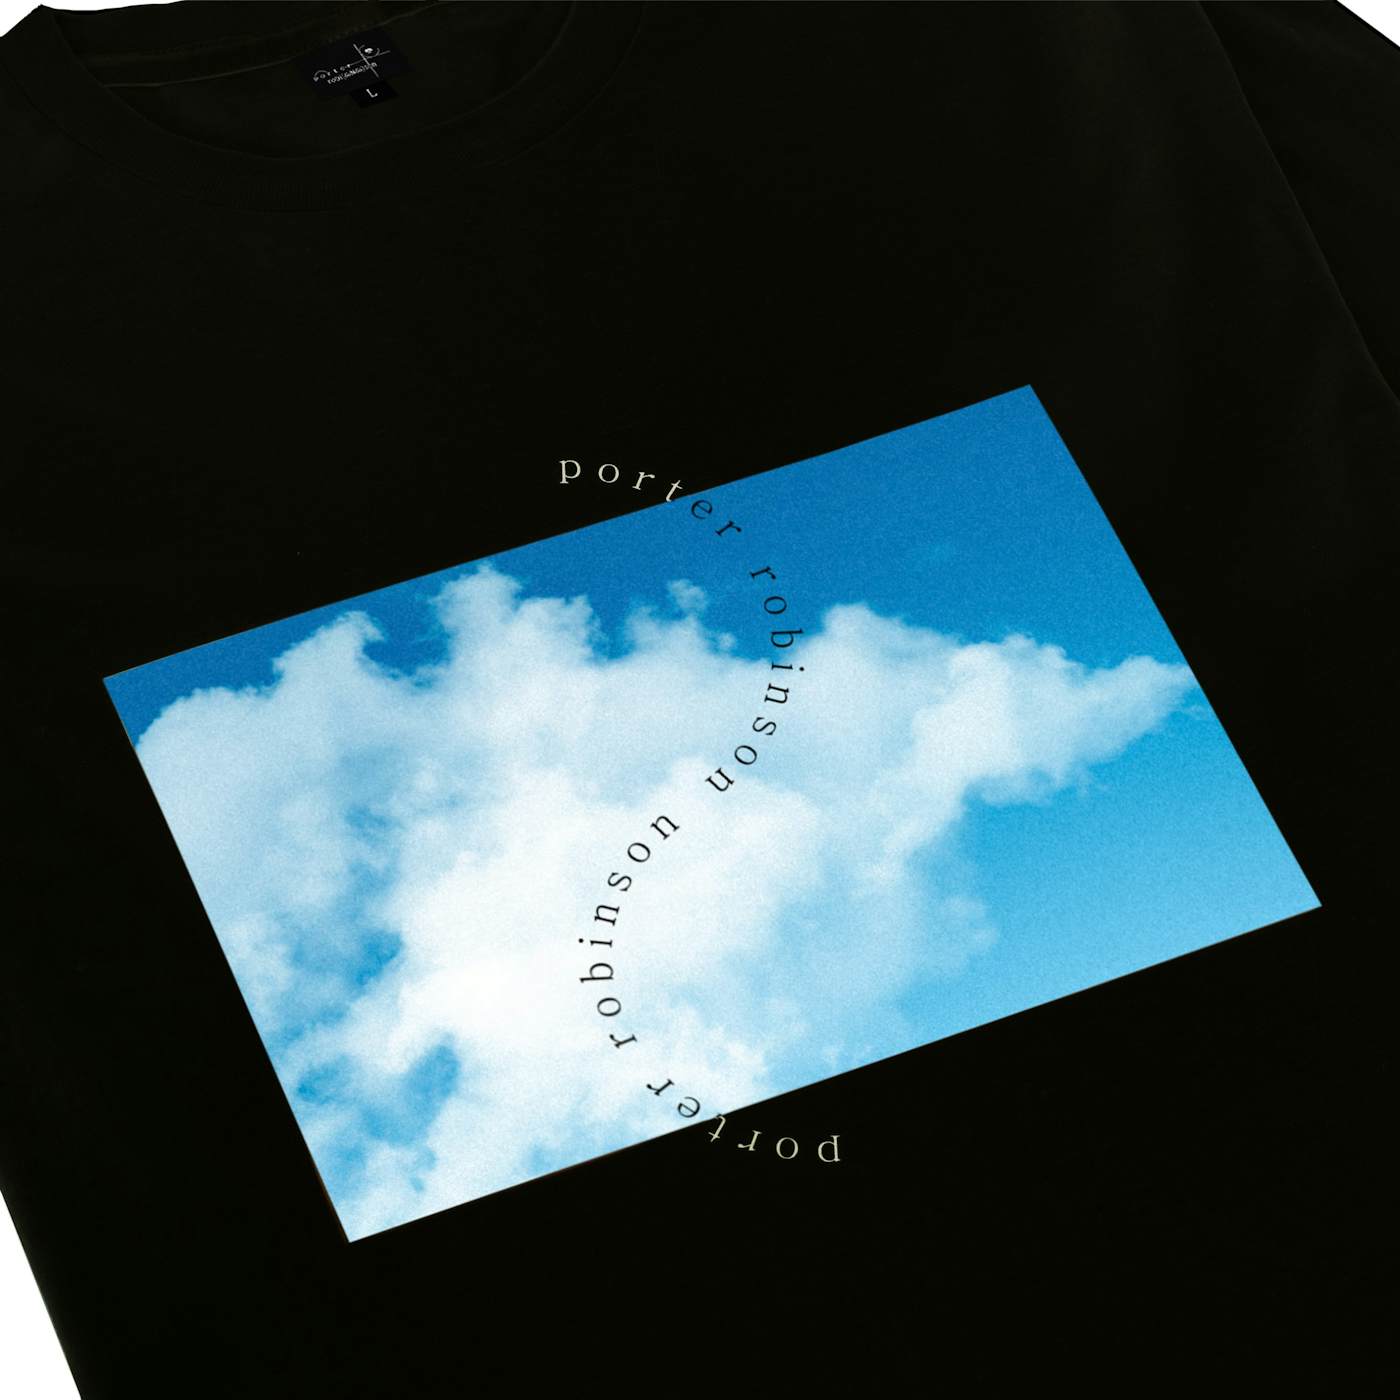 Porter Robinson sky / moon / ghost long sleeve (black)